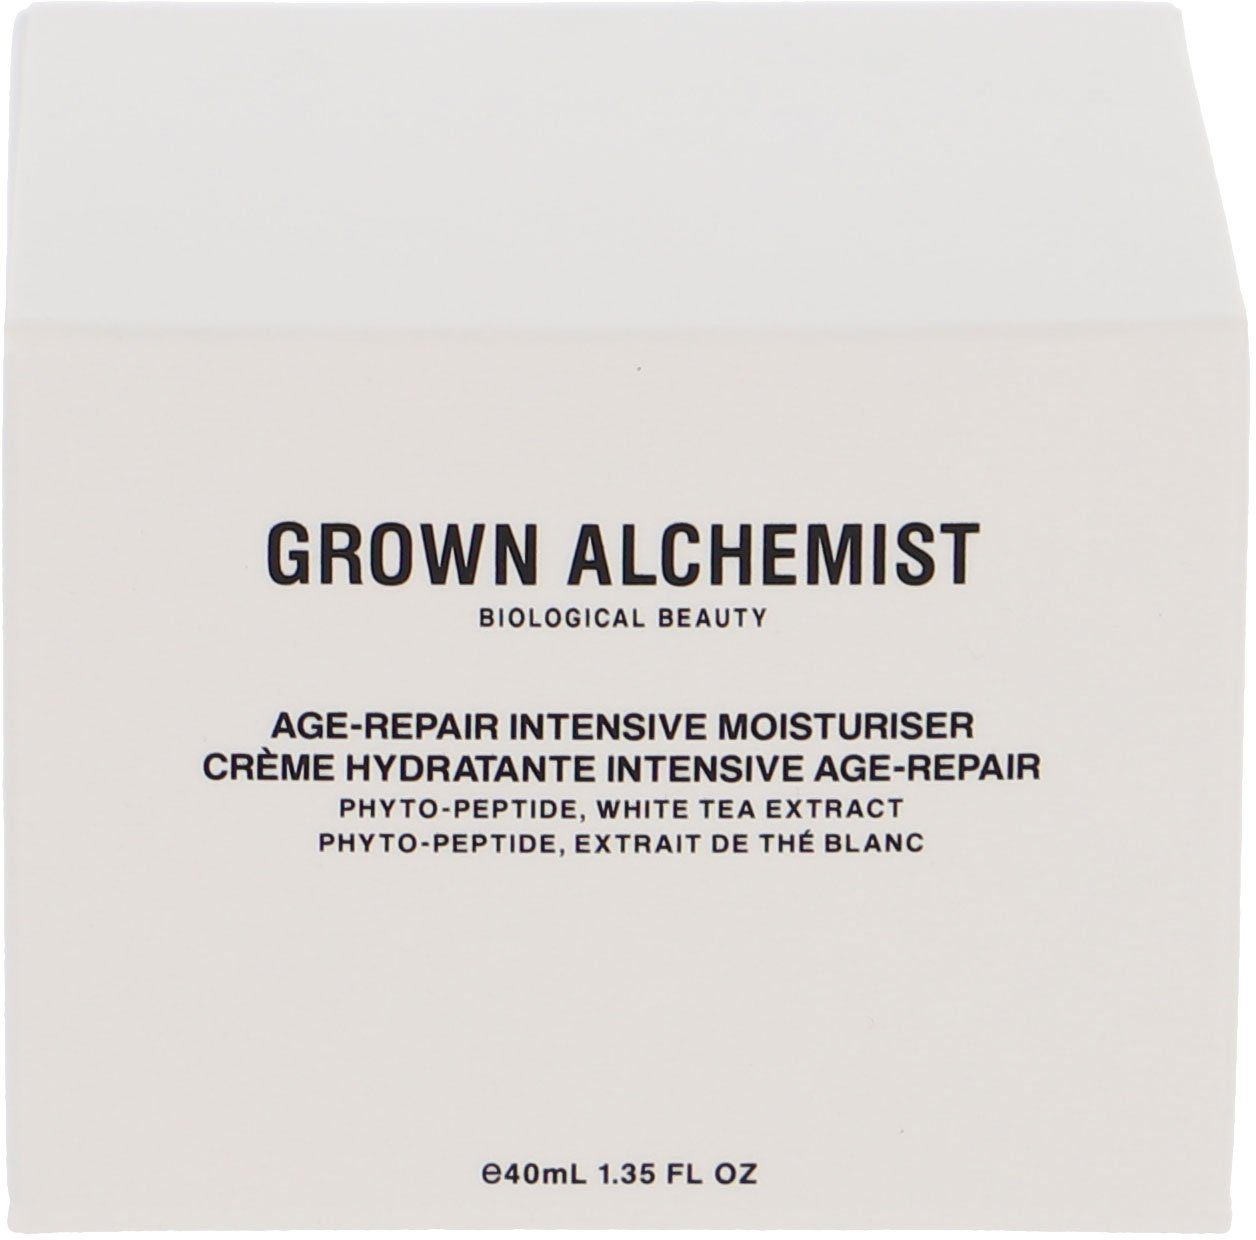 Extract, Intensive White Tea Phyto-Peptide Anti-Aging-Creme ALCHEMIST Age-Repair Moisturiser, GROWN